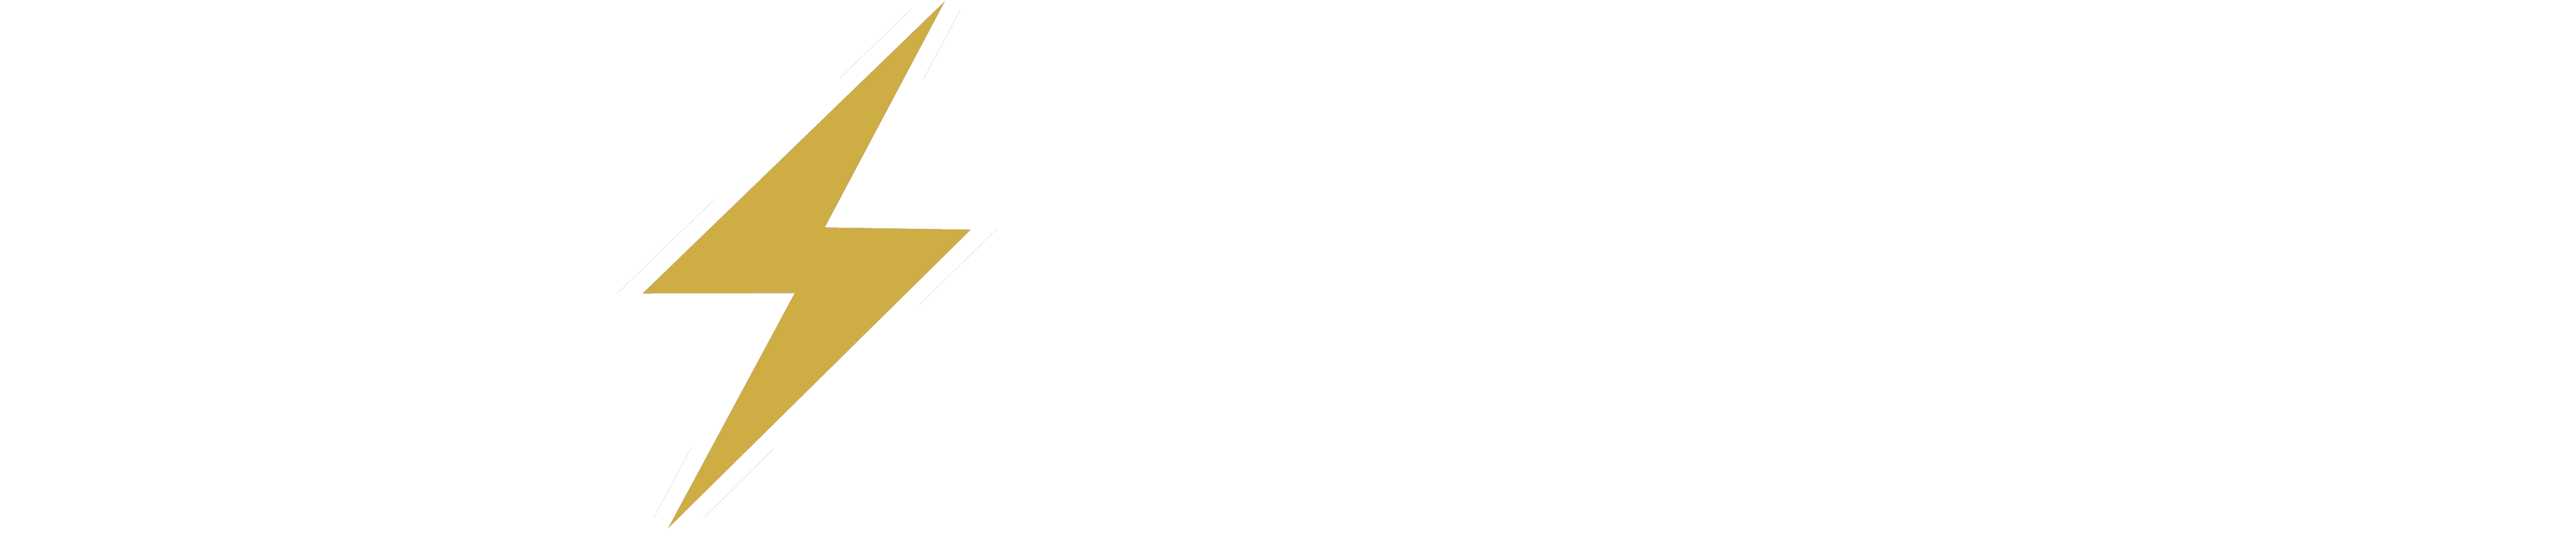 superbike logo